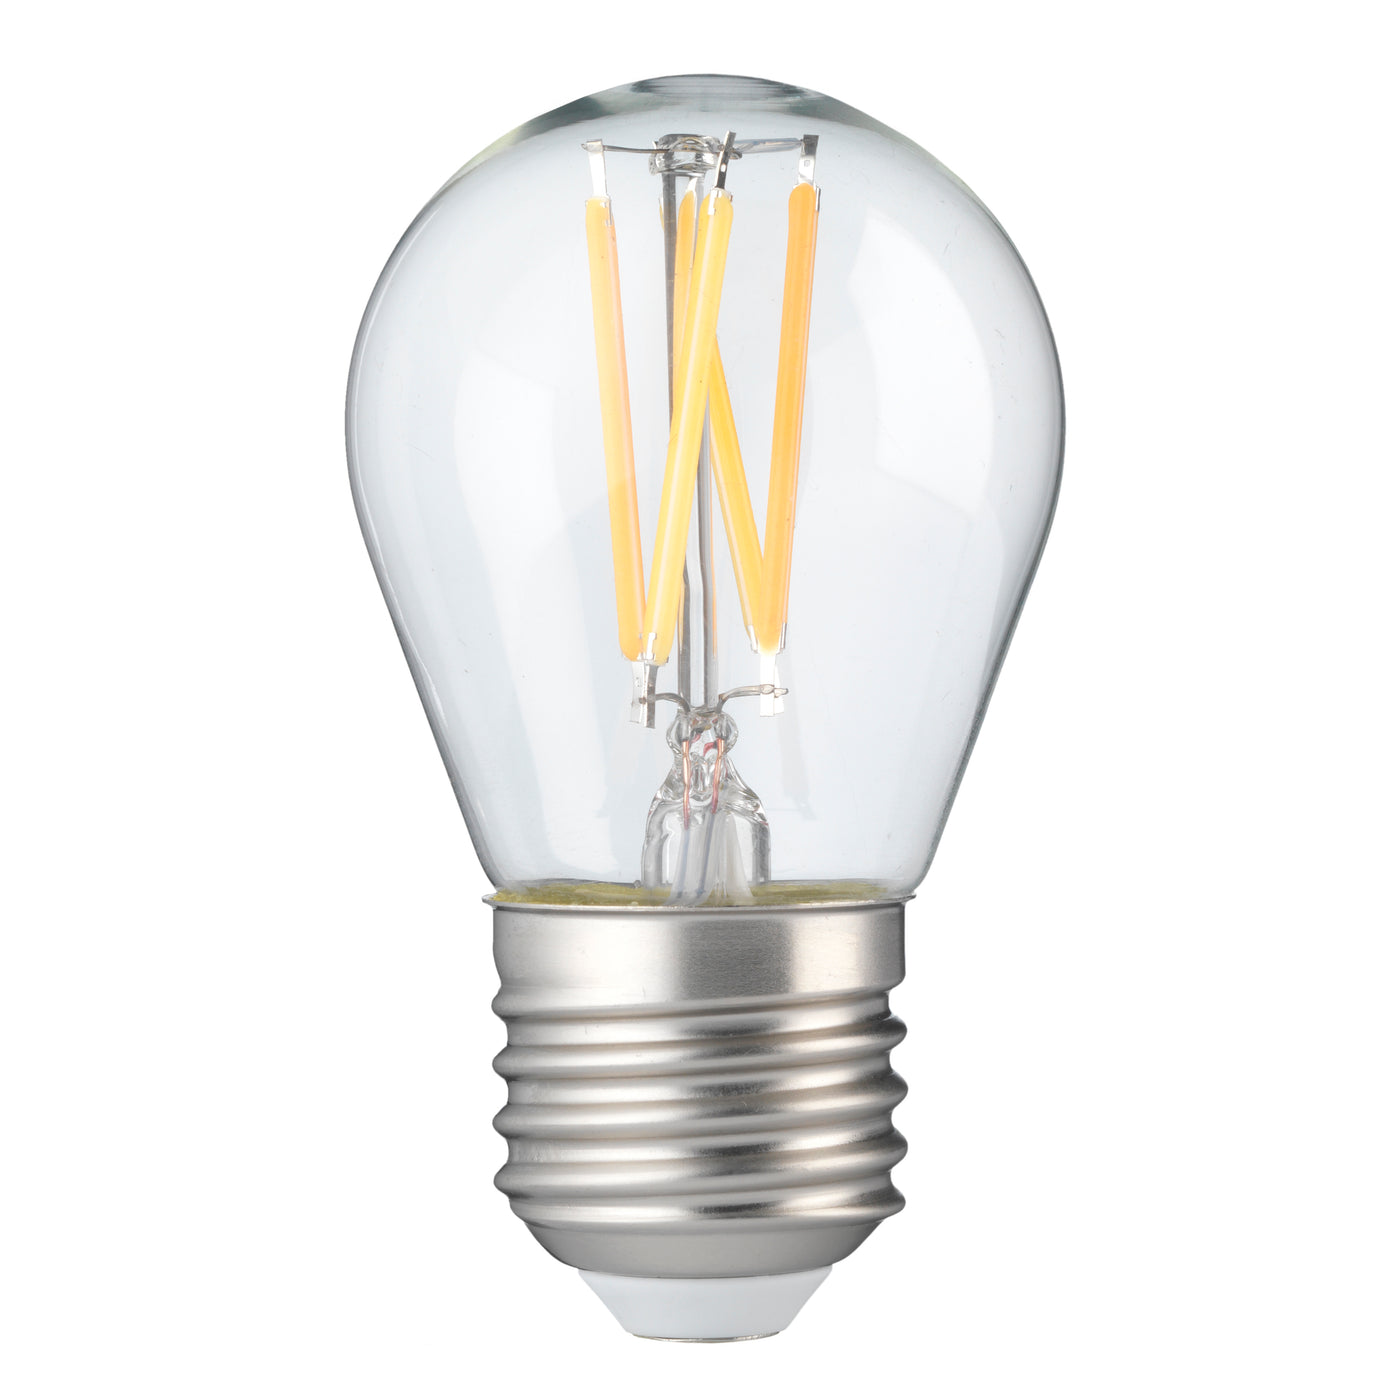 Alecto SMARTLIGHT120 - Lampe LED à filament intelligent avec Wi-Fi